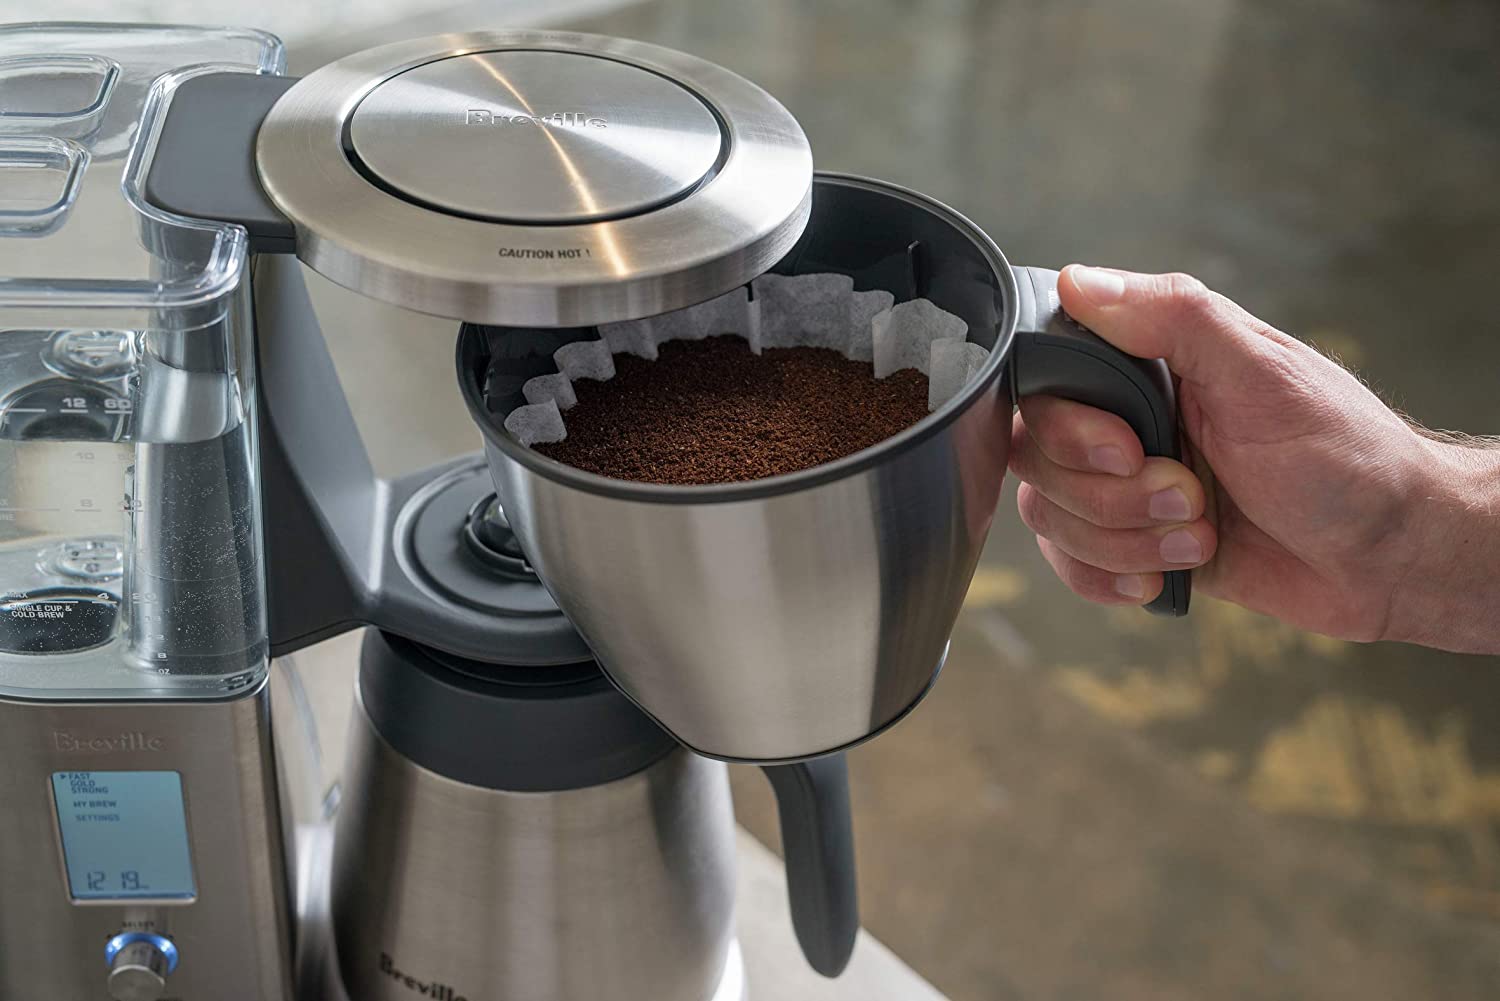 https://www.digitaltrends.com/wp-content/uploads/2022/09/Breville-Precision-Brewer-Thermal-Coffee-Maker-Filter.jpg?fit=720%2C480&p=1